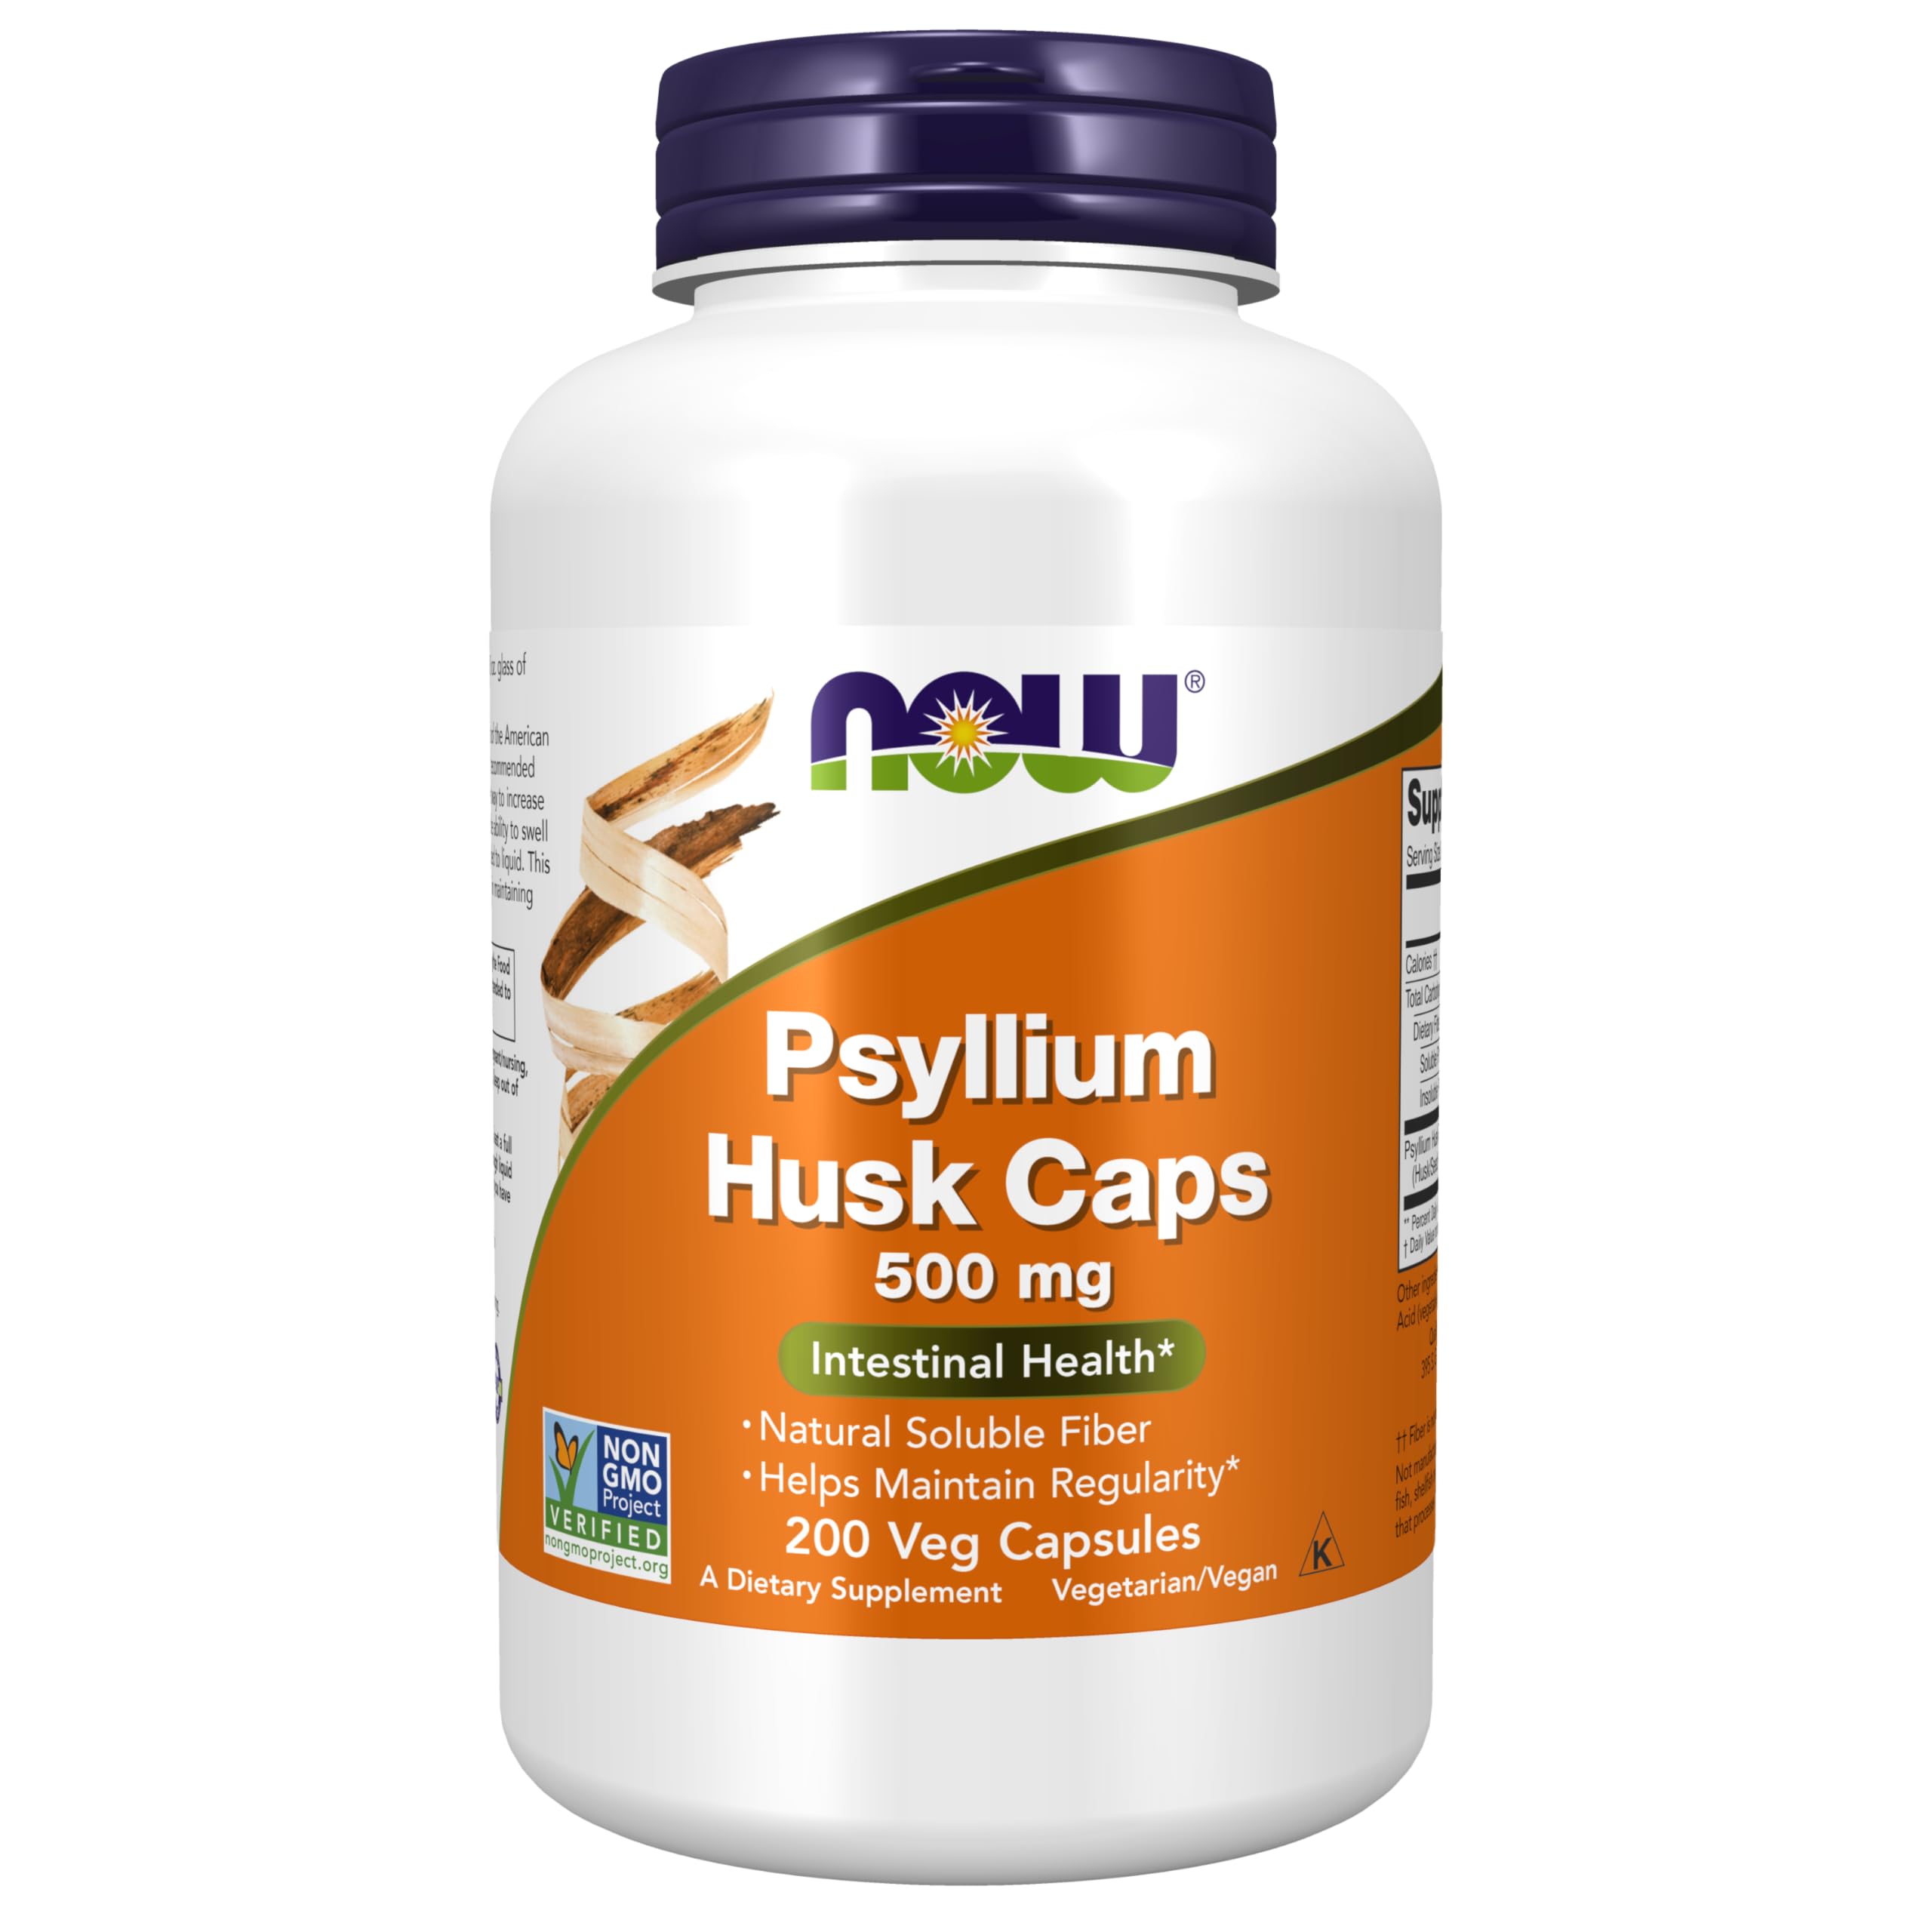 NOW Supplements, Psyllium Husk Caps 500 mg, Non GMO Project Verified, Natural Soluble Fiber, Intestinal Health_, 200 Veg Capsules>